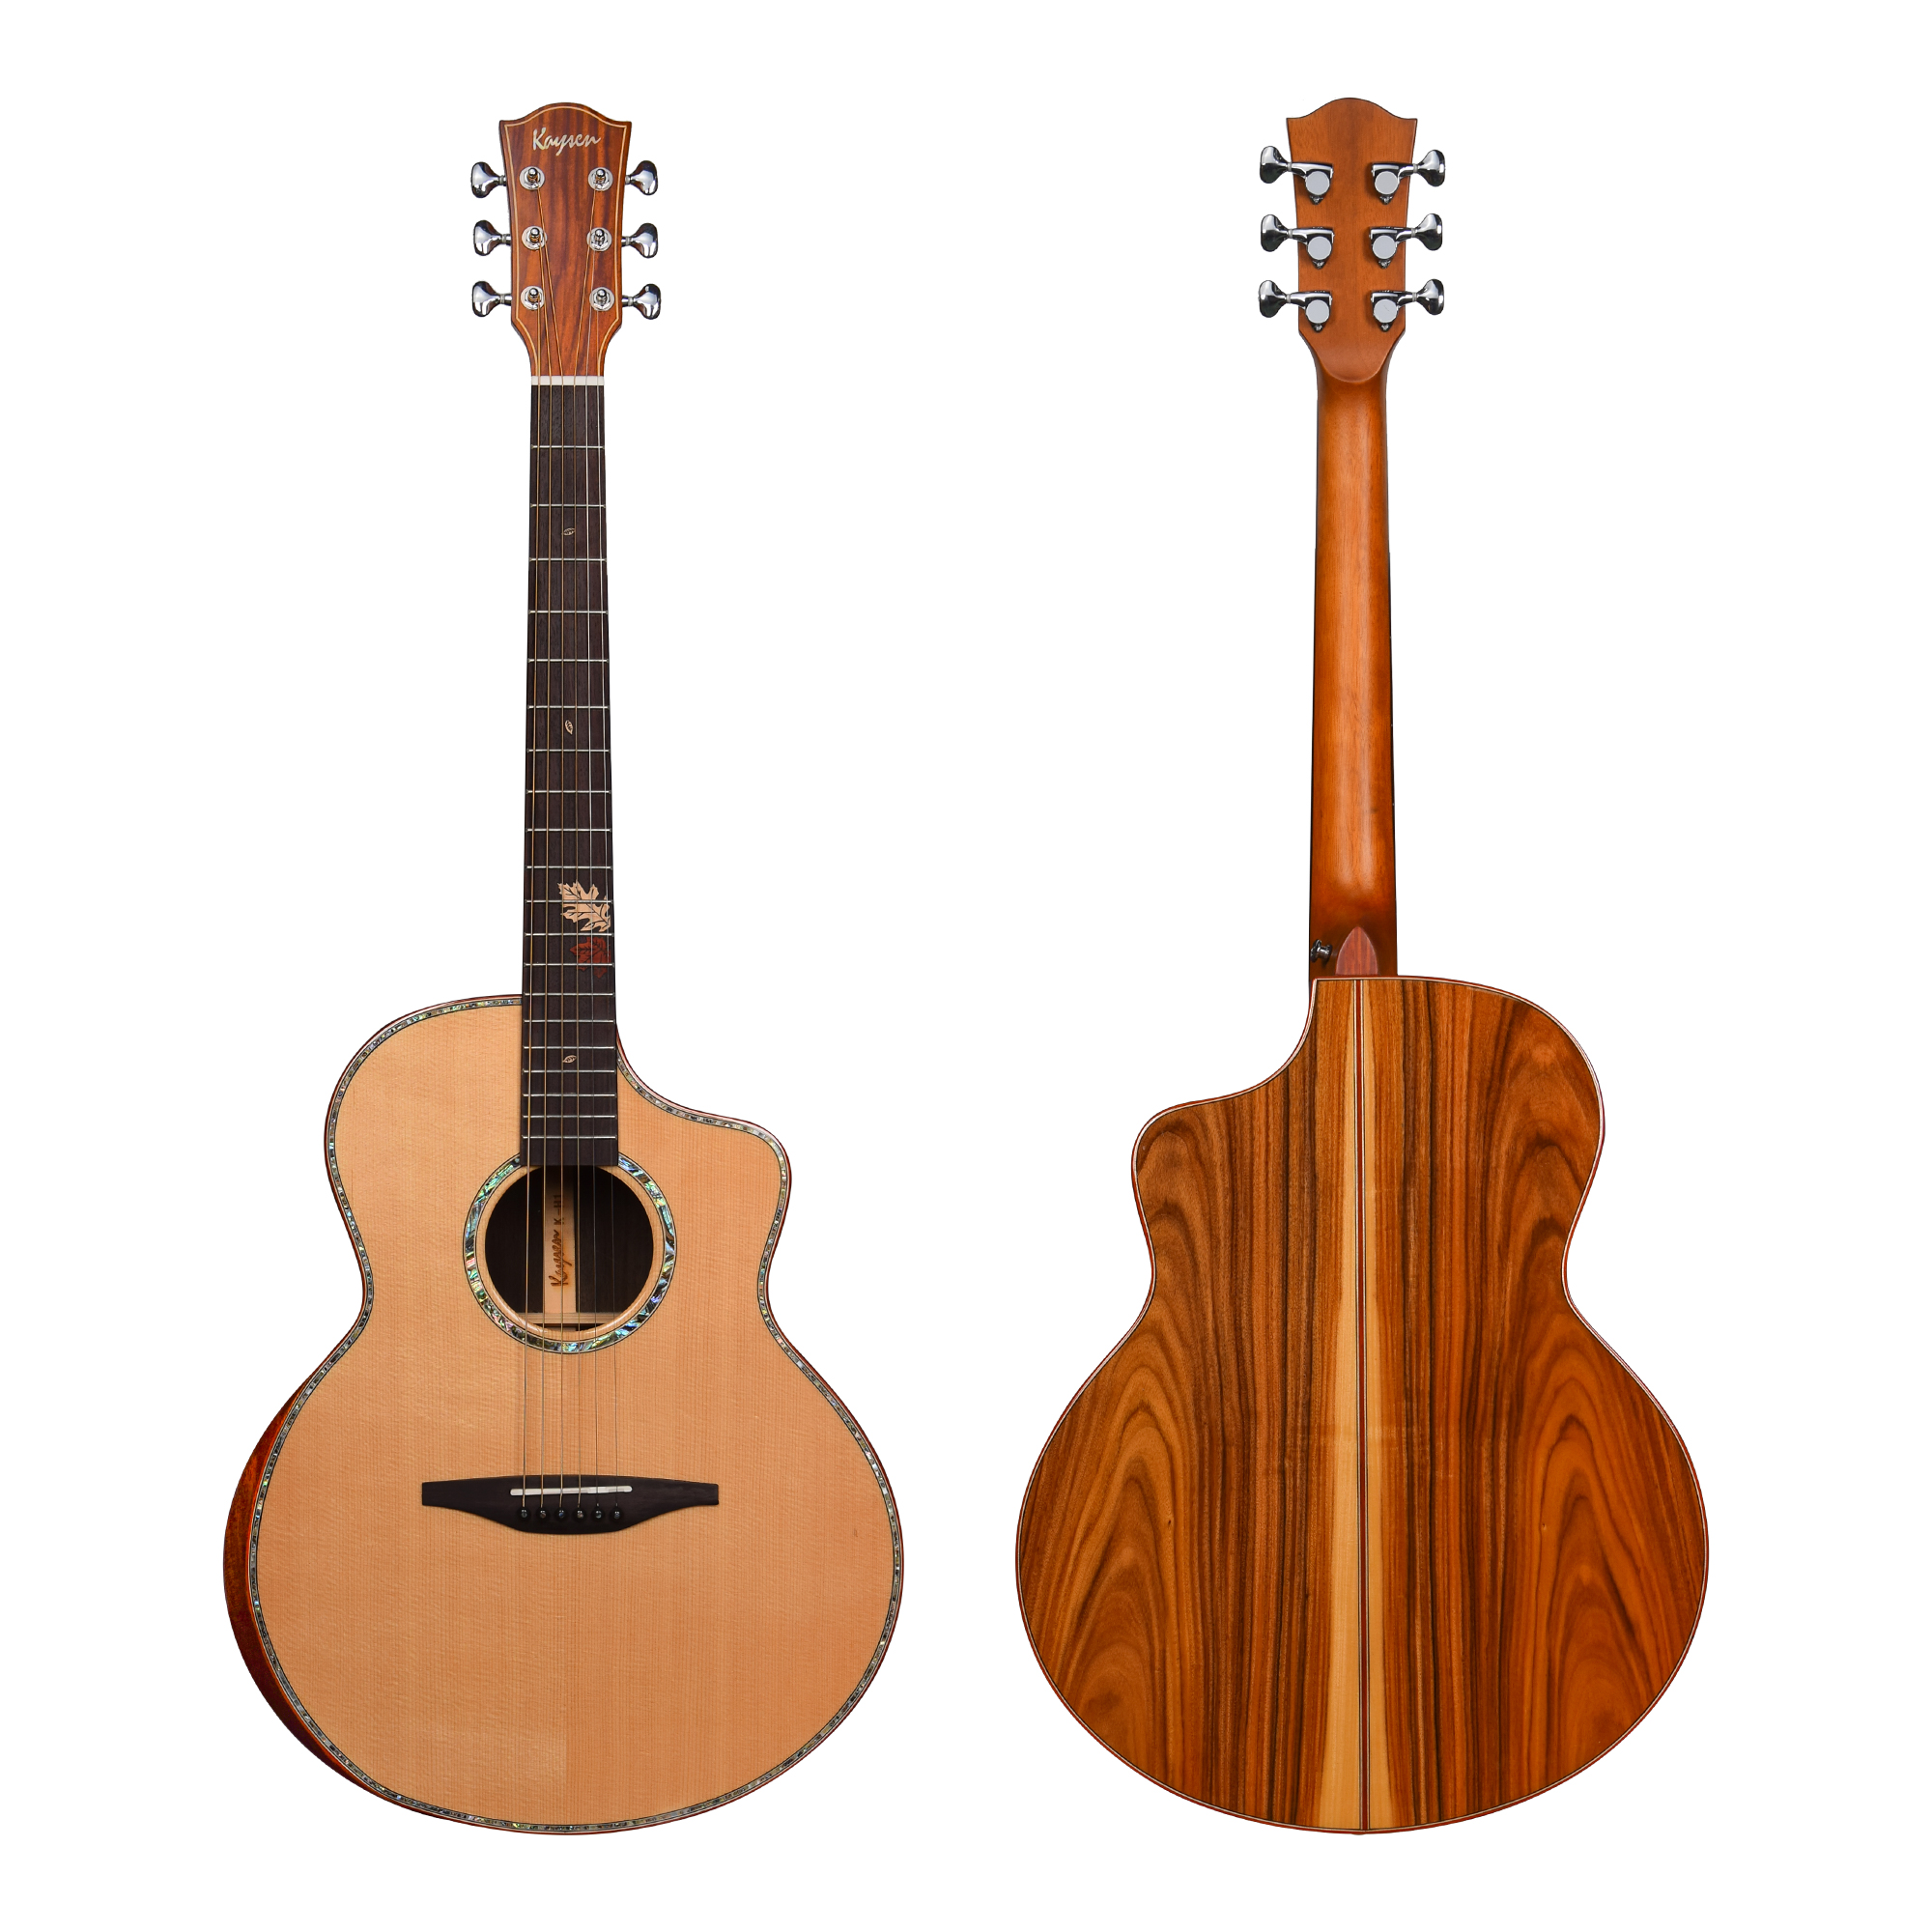 Solid wood acoustic guitar Electric acoustic גיטרה אקוסטית עץ מלא גיטרה אוקסטית מוגברת